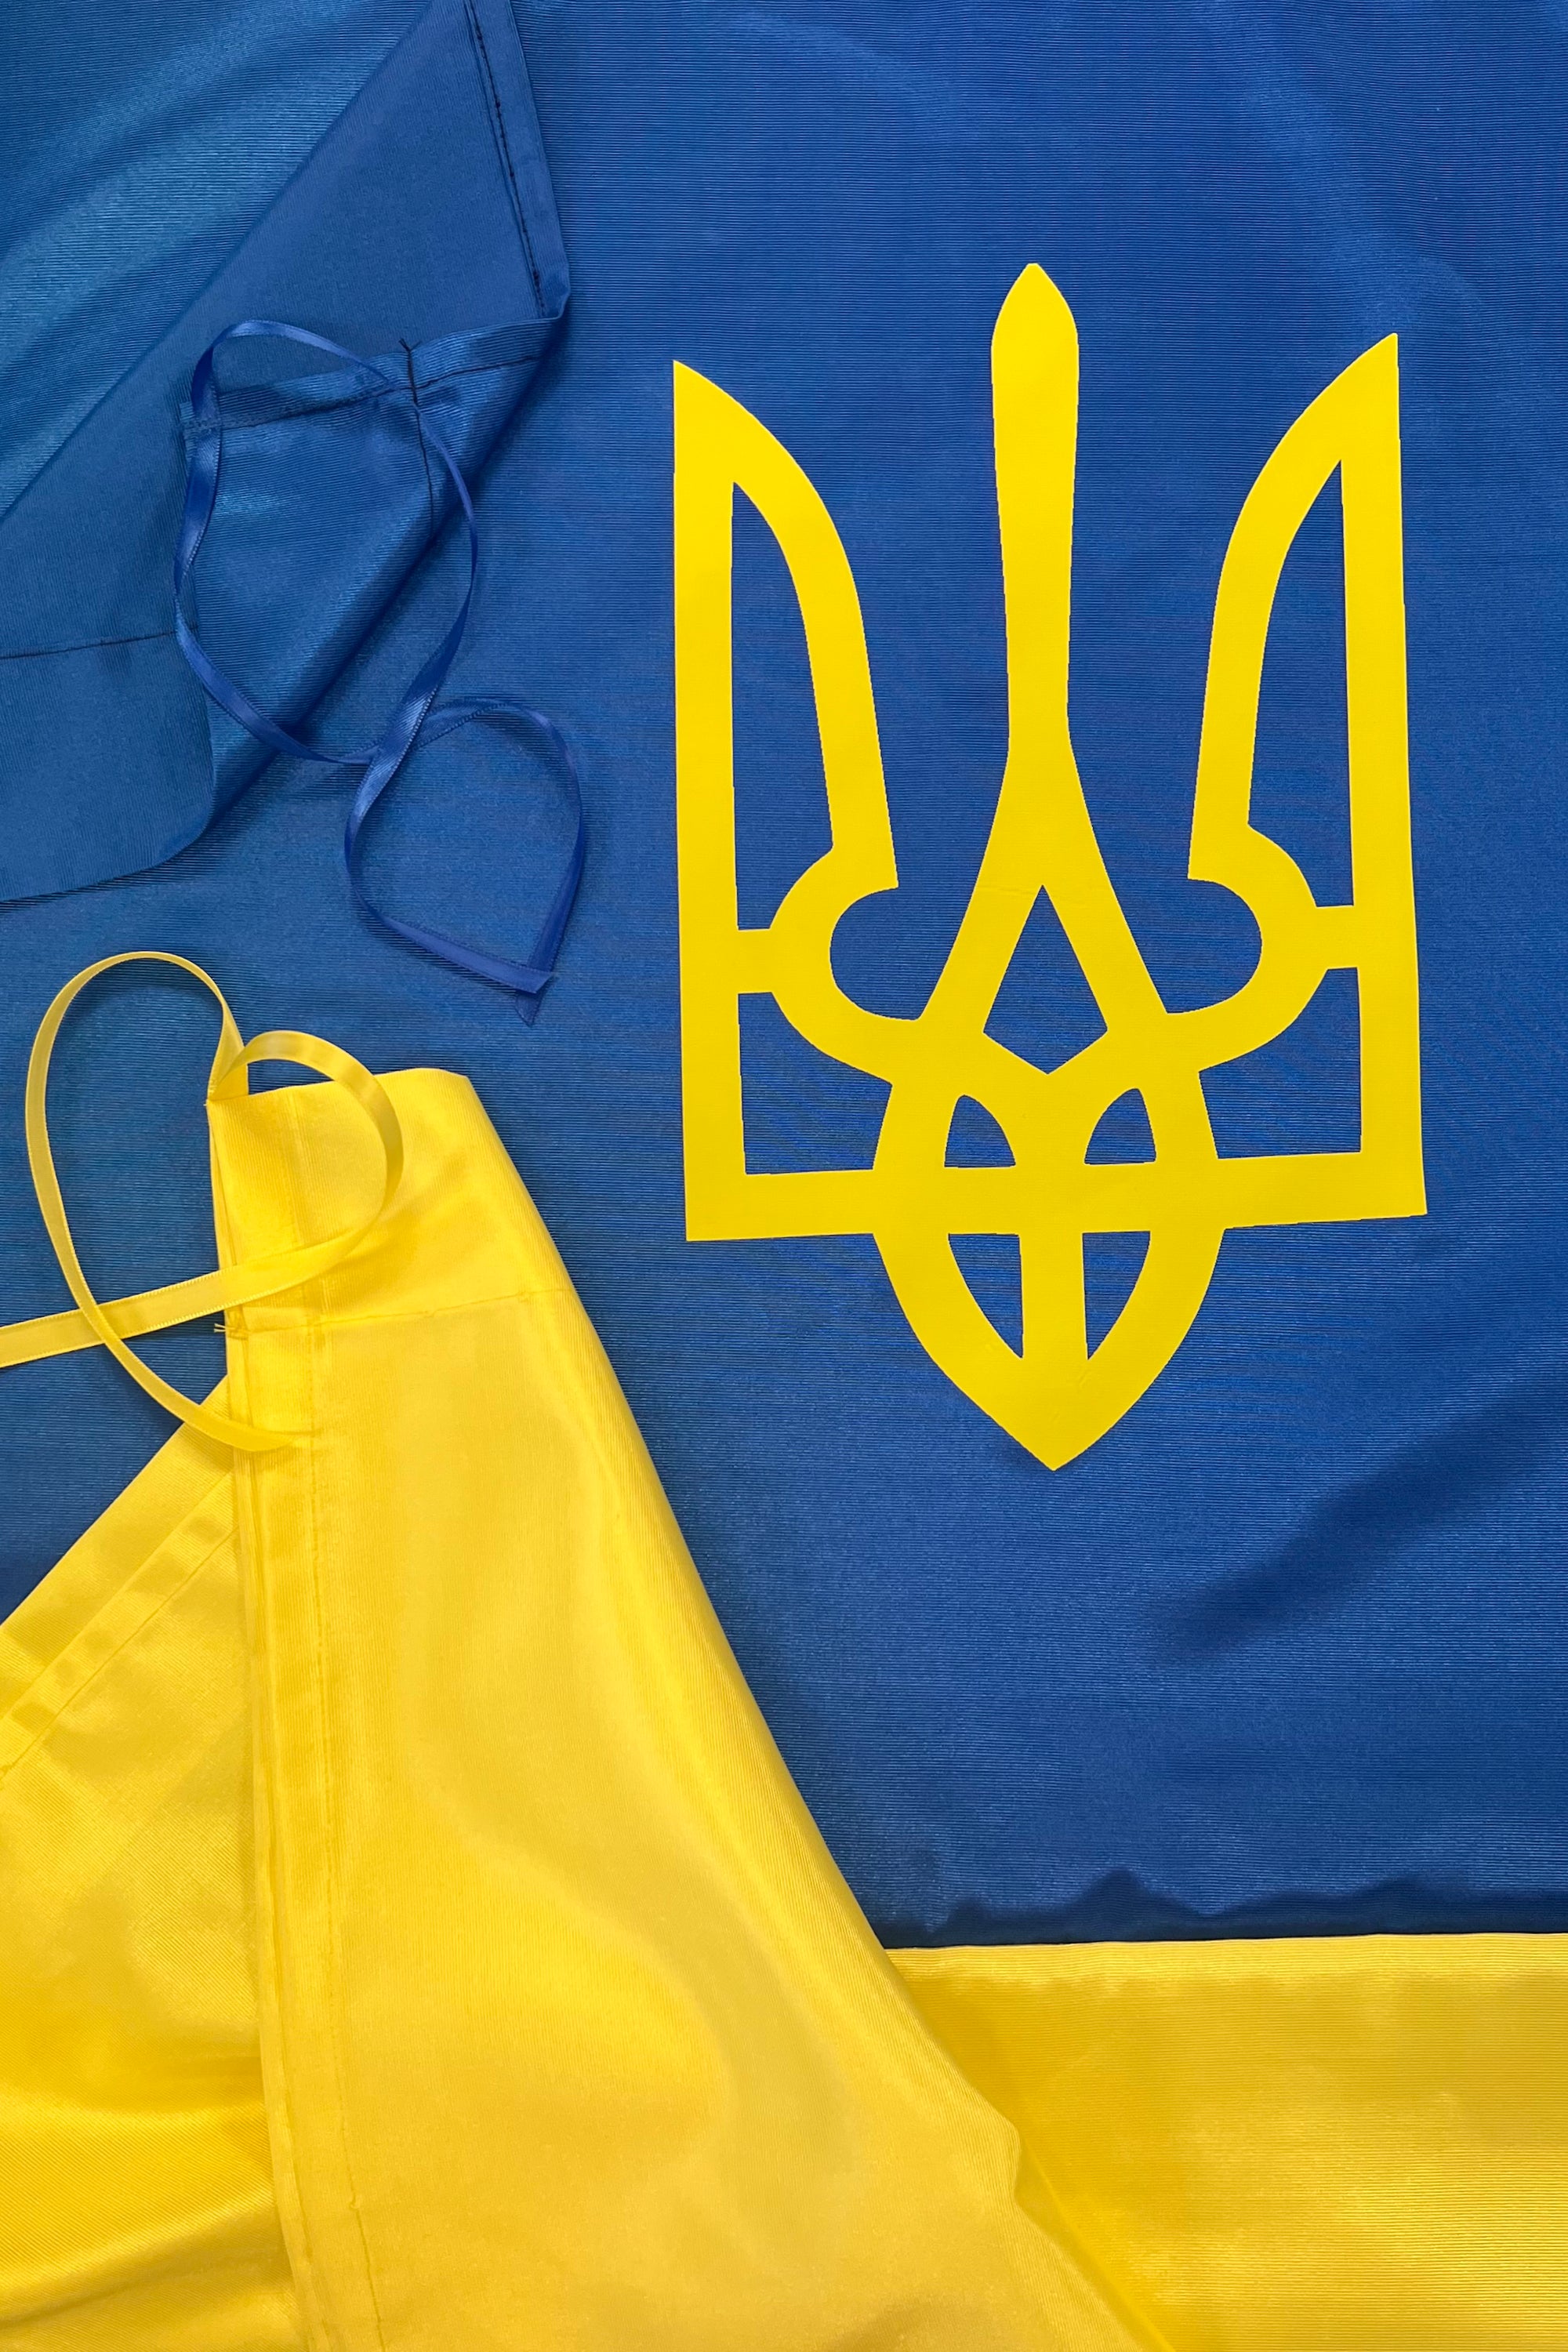 Ukrainian flag 57" - 41"